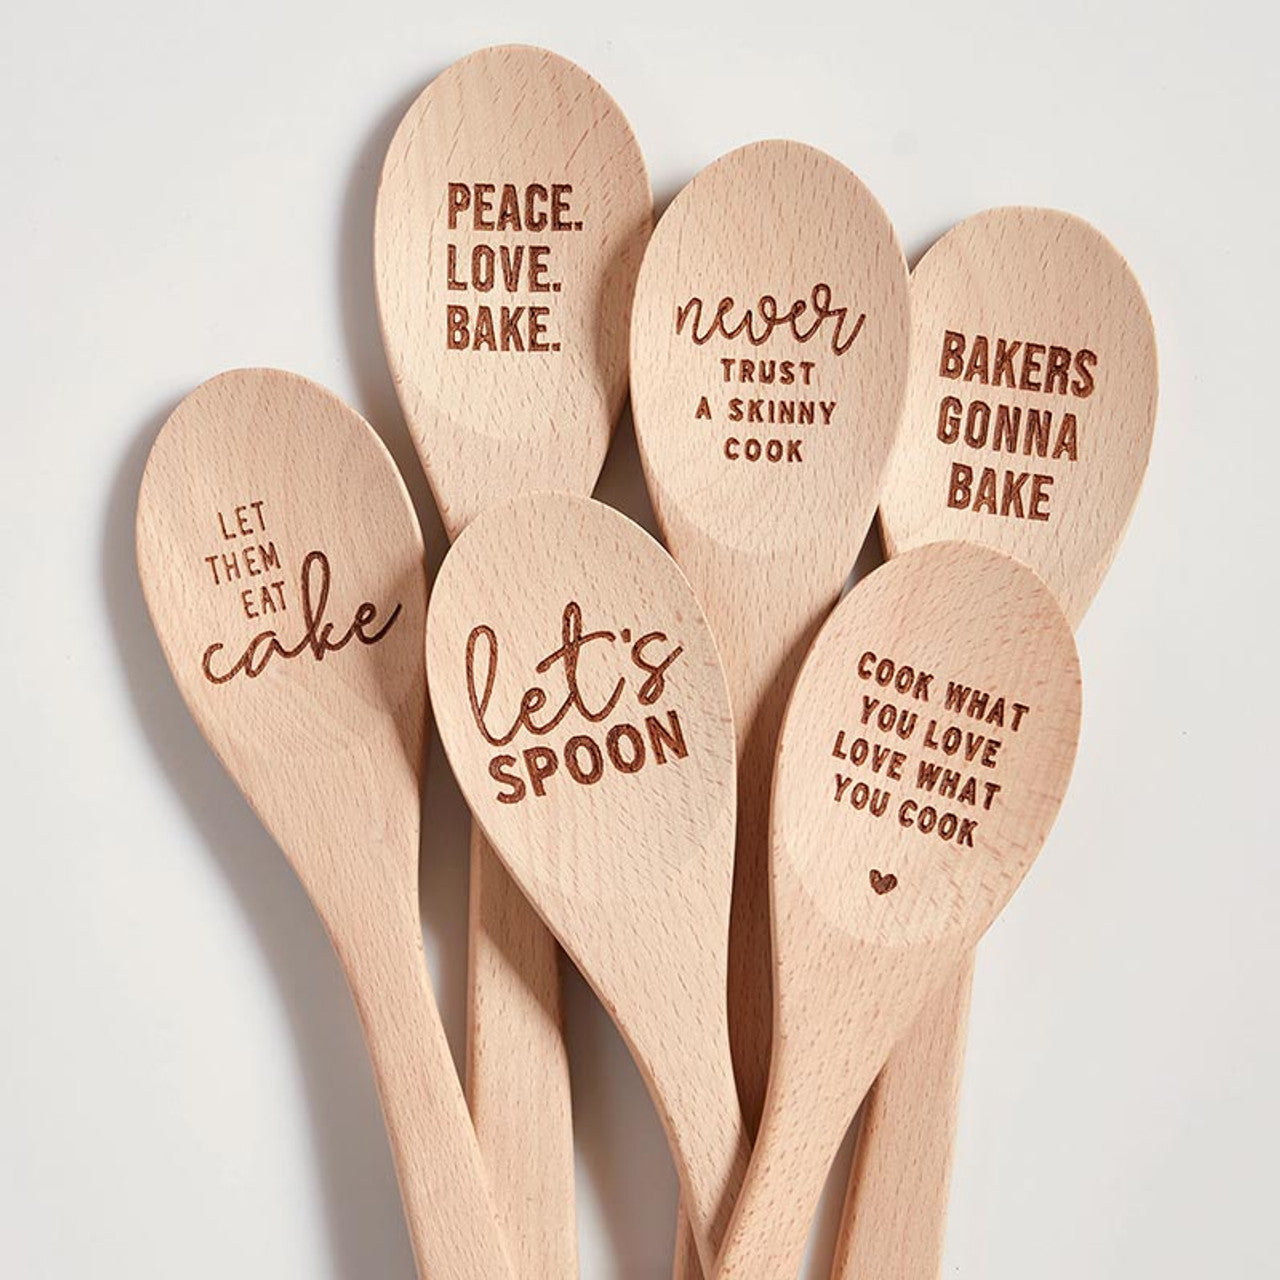 Let Them Eat Cake Marie Antoinette Inspired Cooking Spoon | Cute Wooden Spoon in Muslin Gift Bag